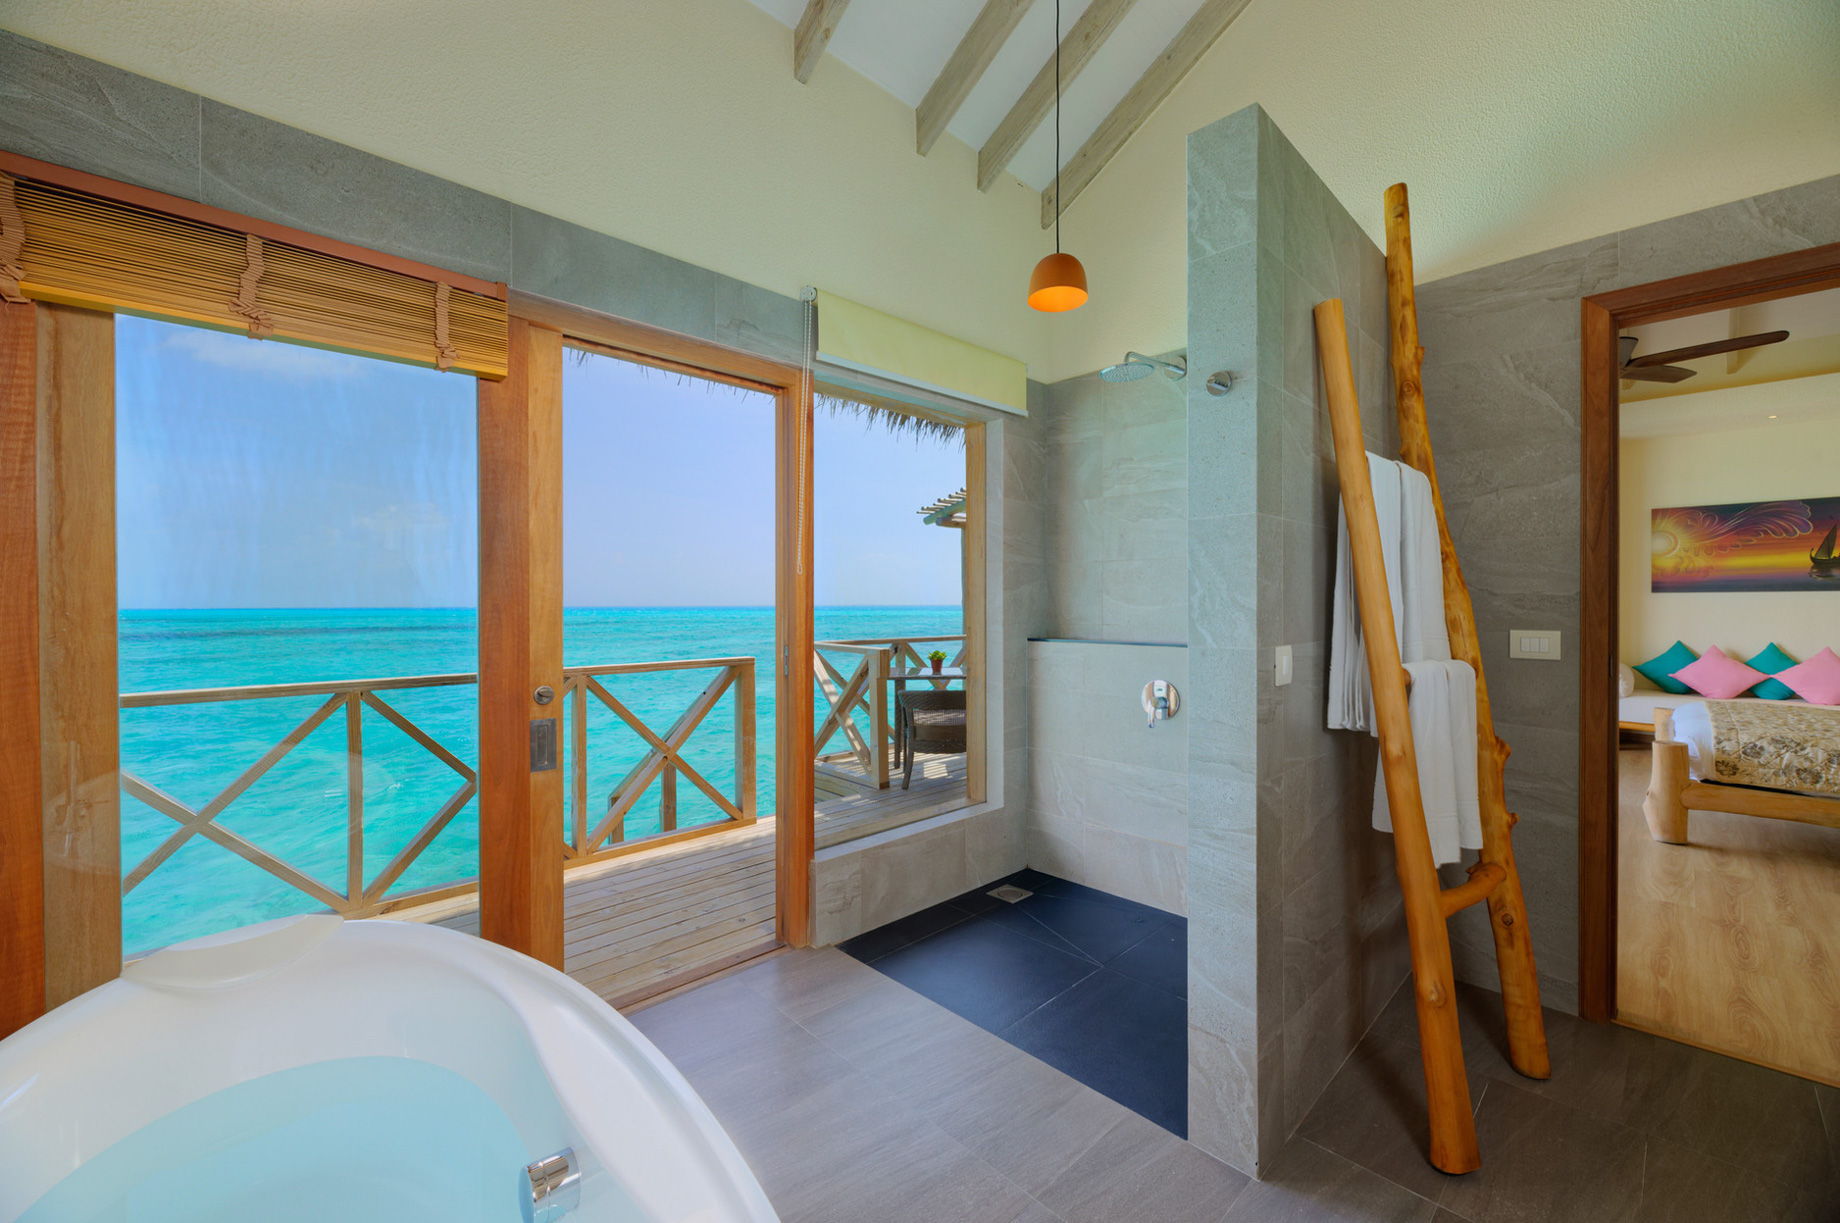 You & Me Maldives Resort – Uthurumaafaru, Raa Atoll, Maldives – Aqua Suite with Pool Bathroom